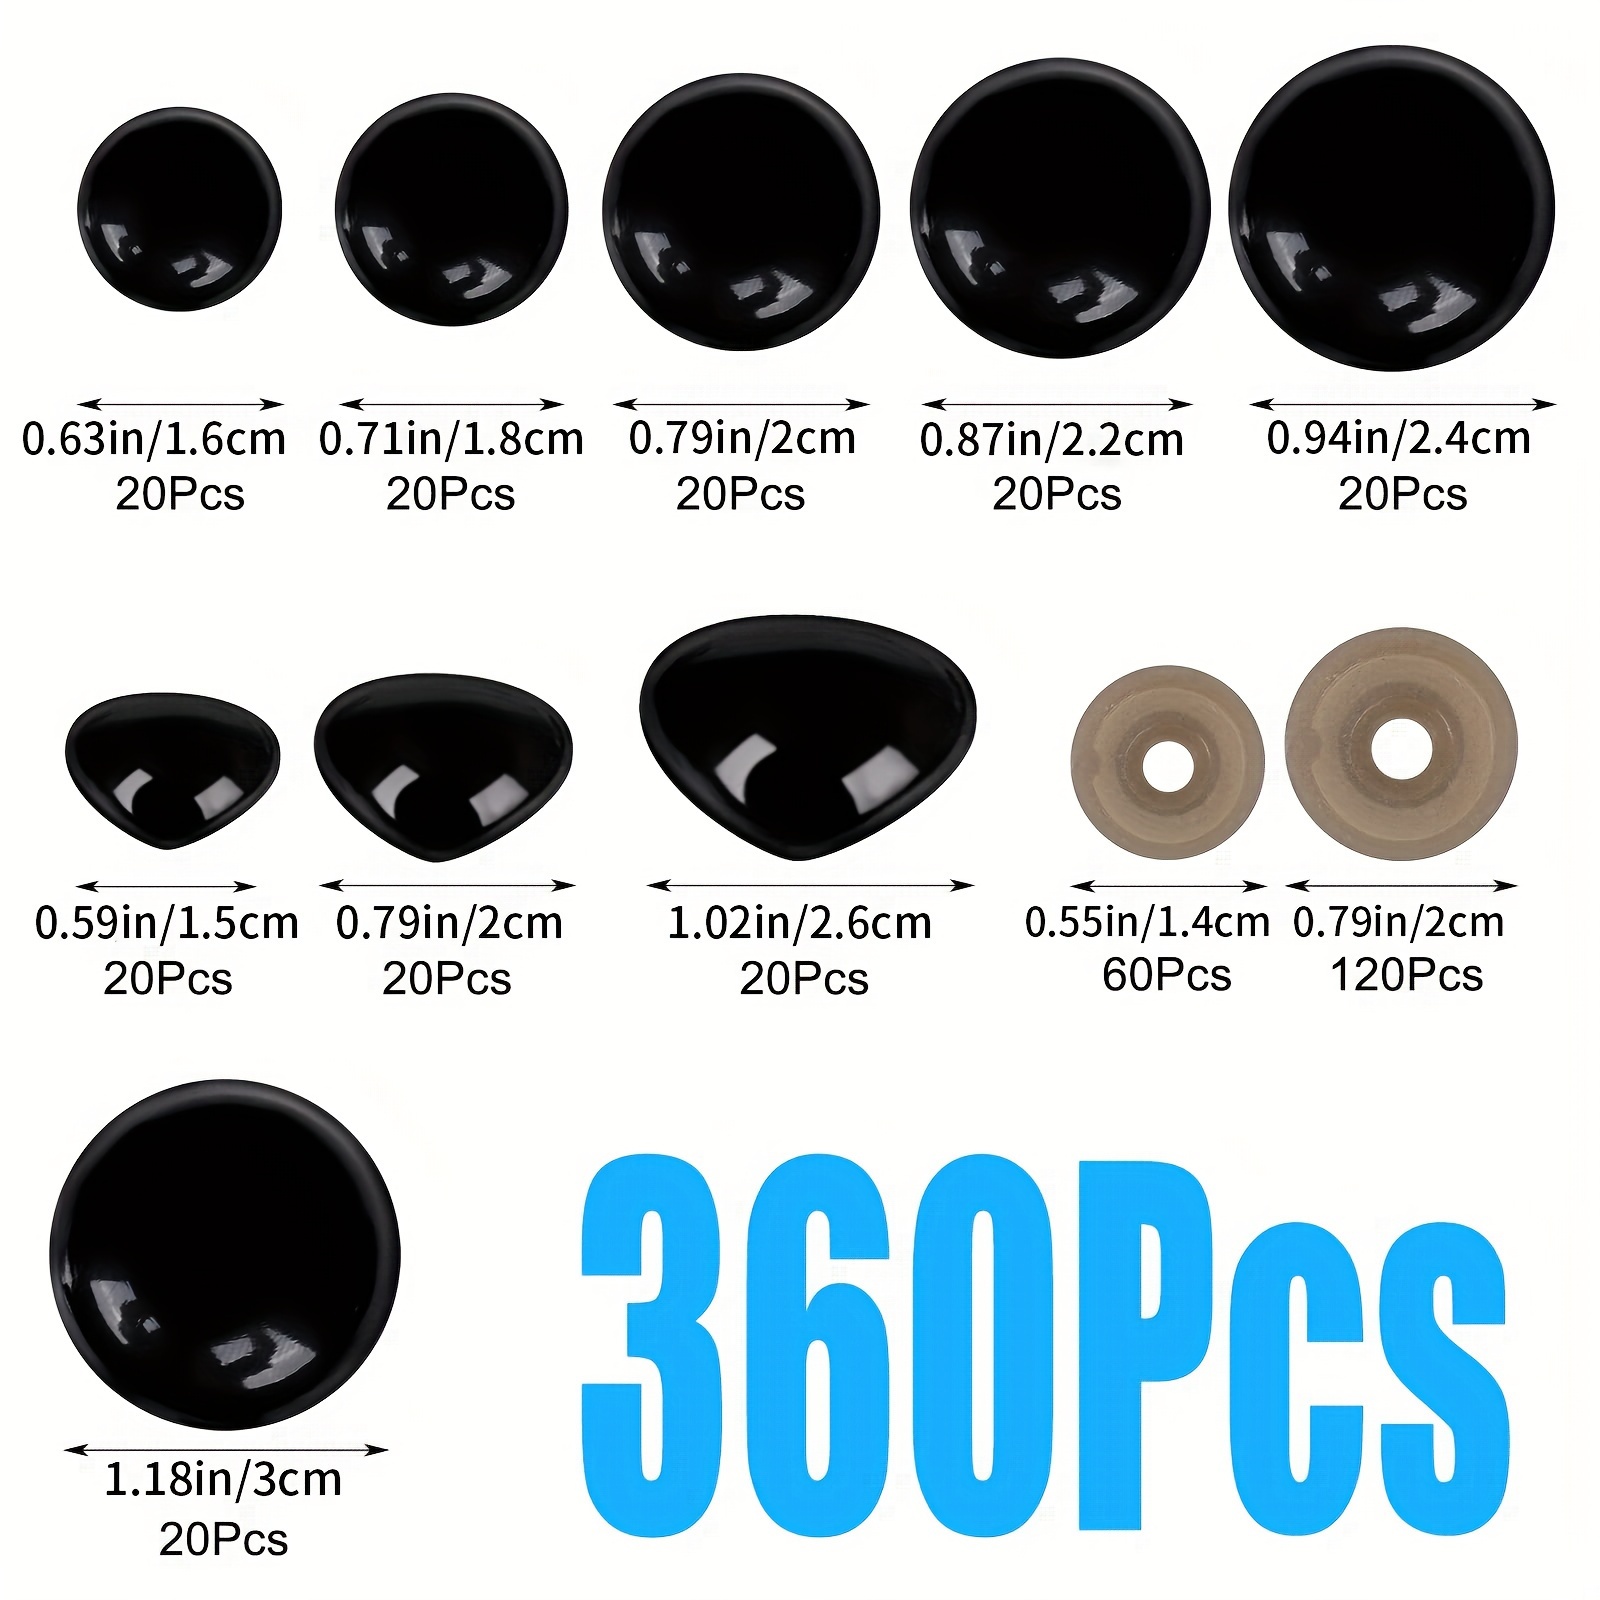 60Pcs Black Plastic Safety Eyes with Washers Craft Eyes for